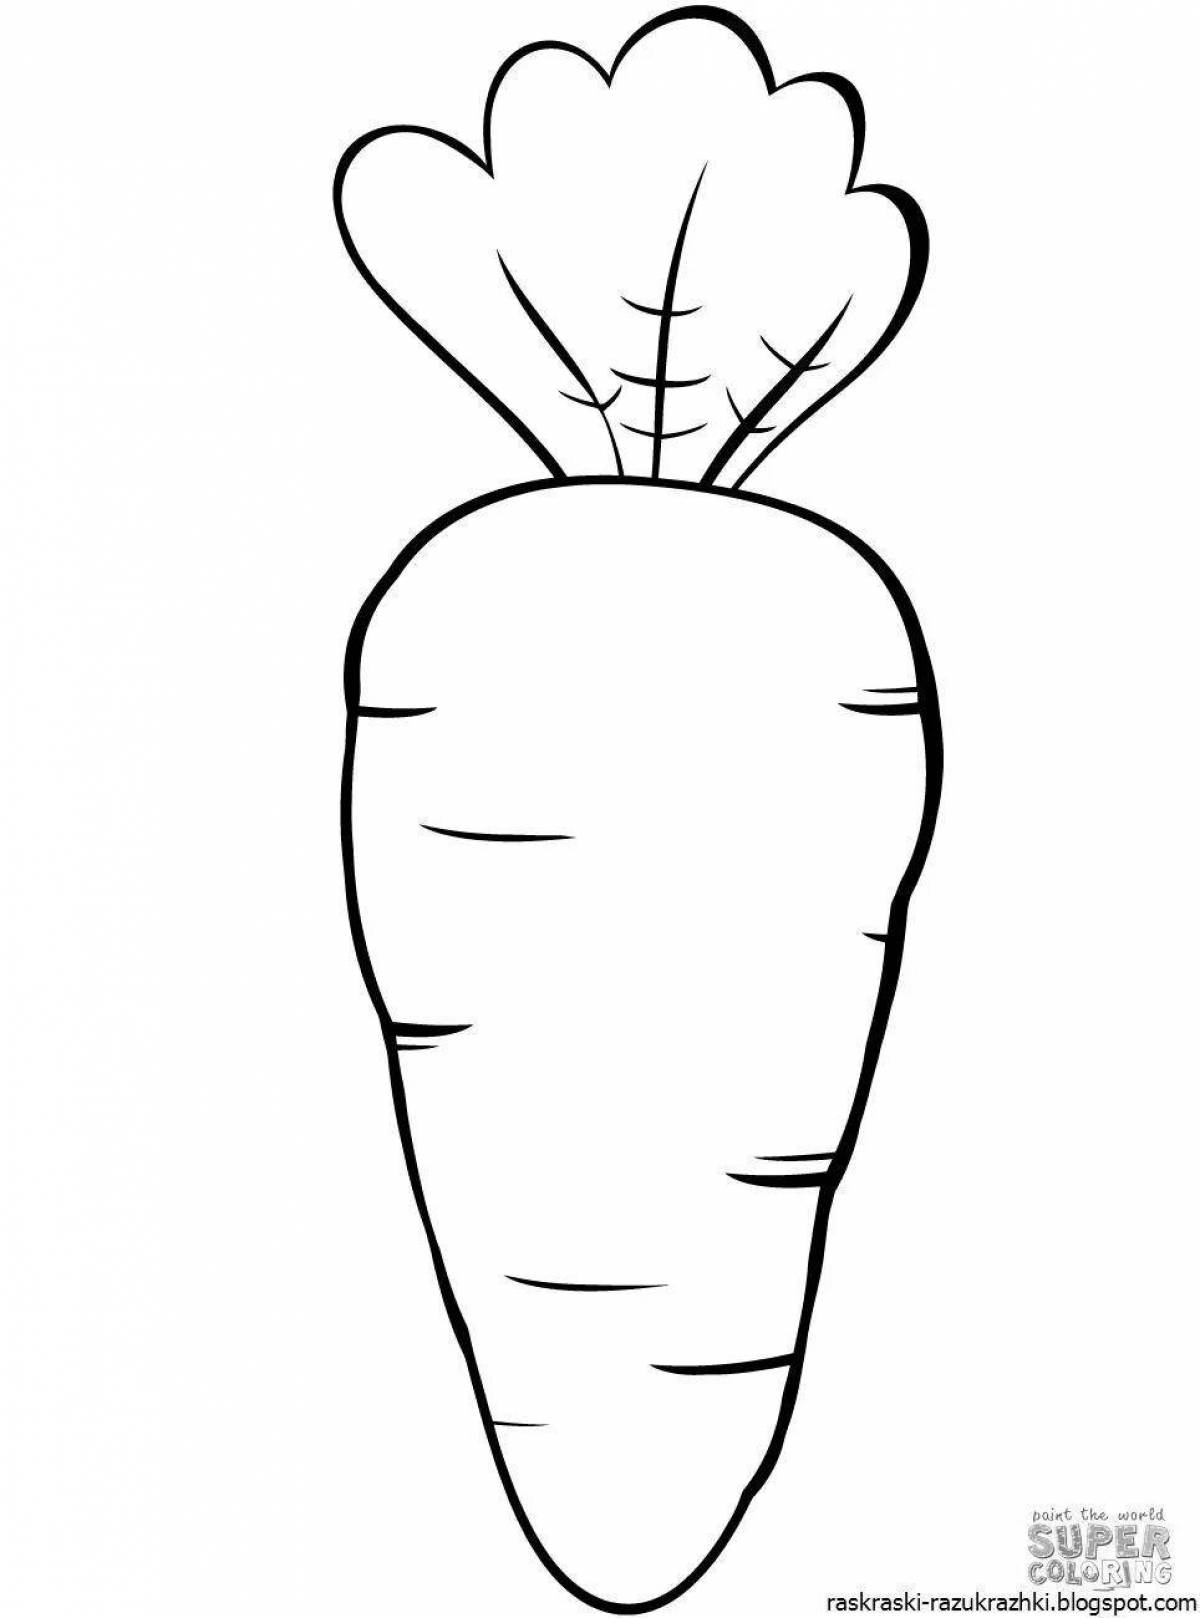 Fun carrot drawing for kids